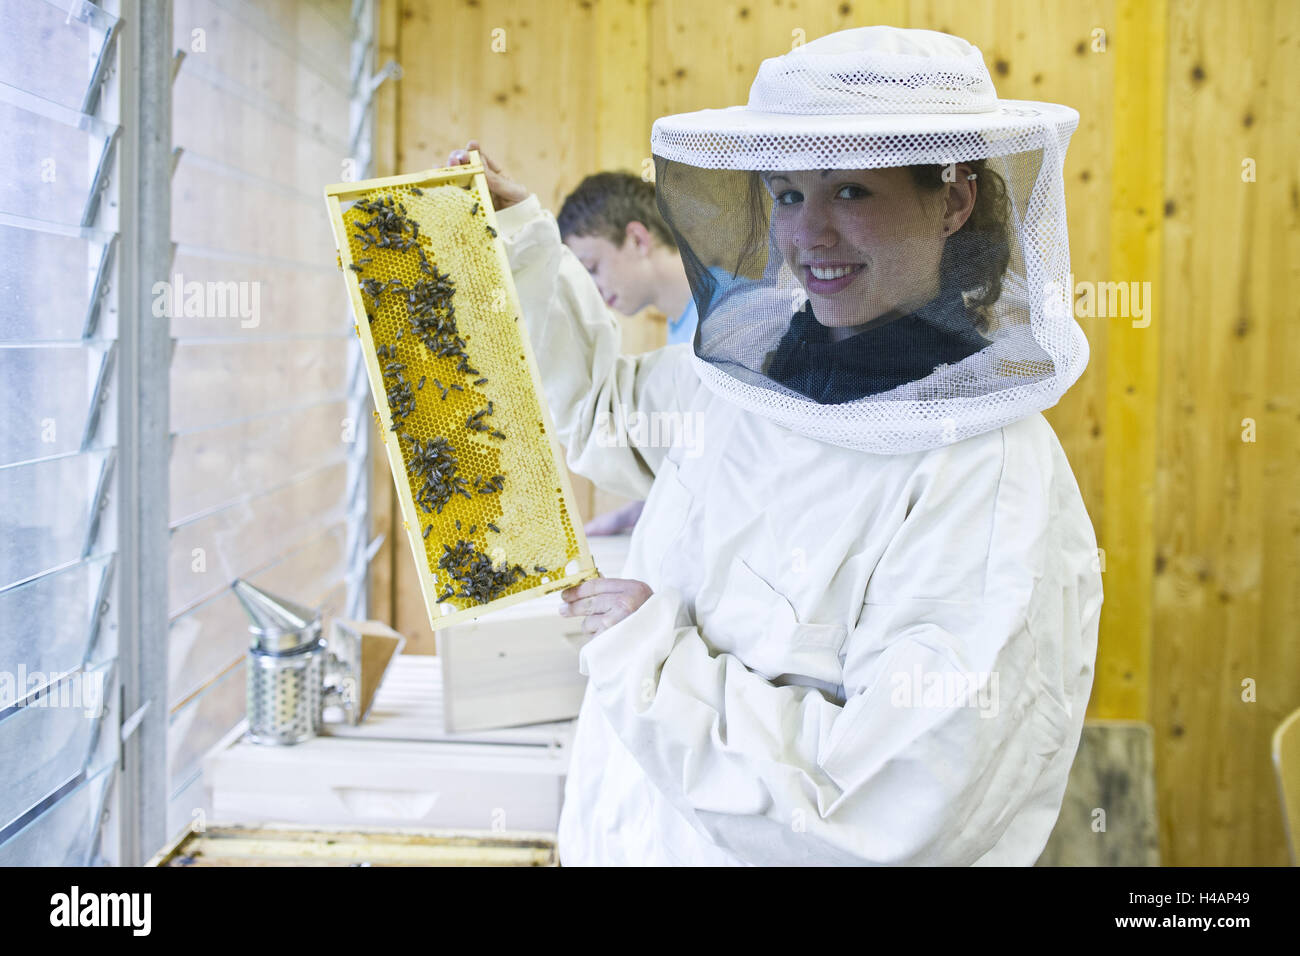 Beekeeper, honeycomb, protective clothing, Stock Photo